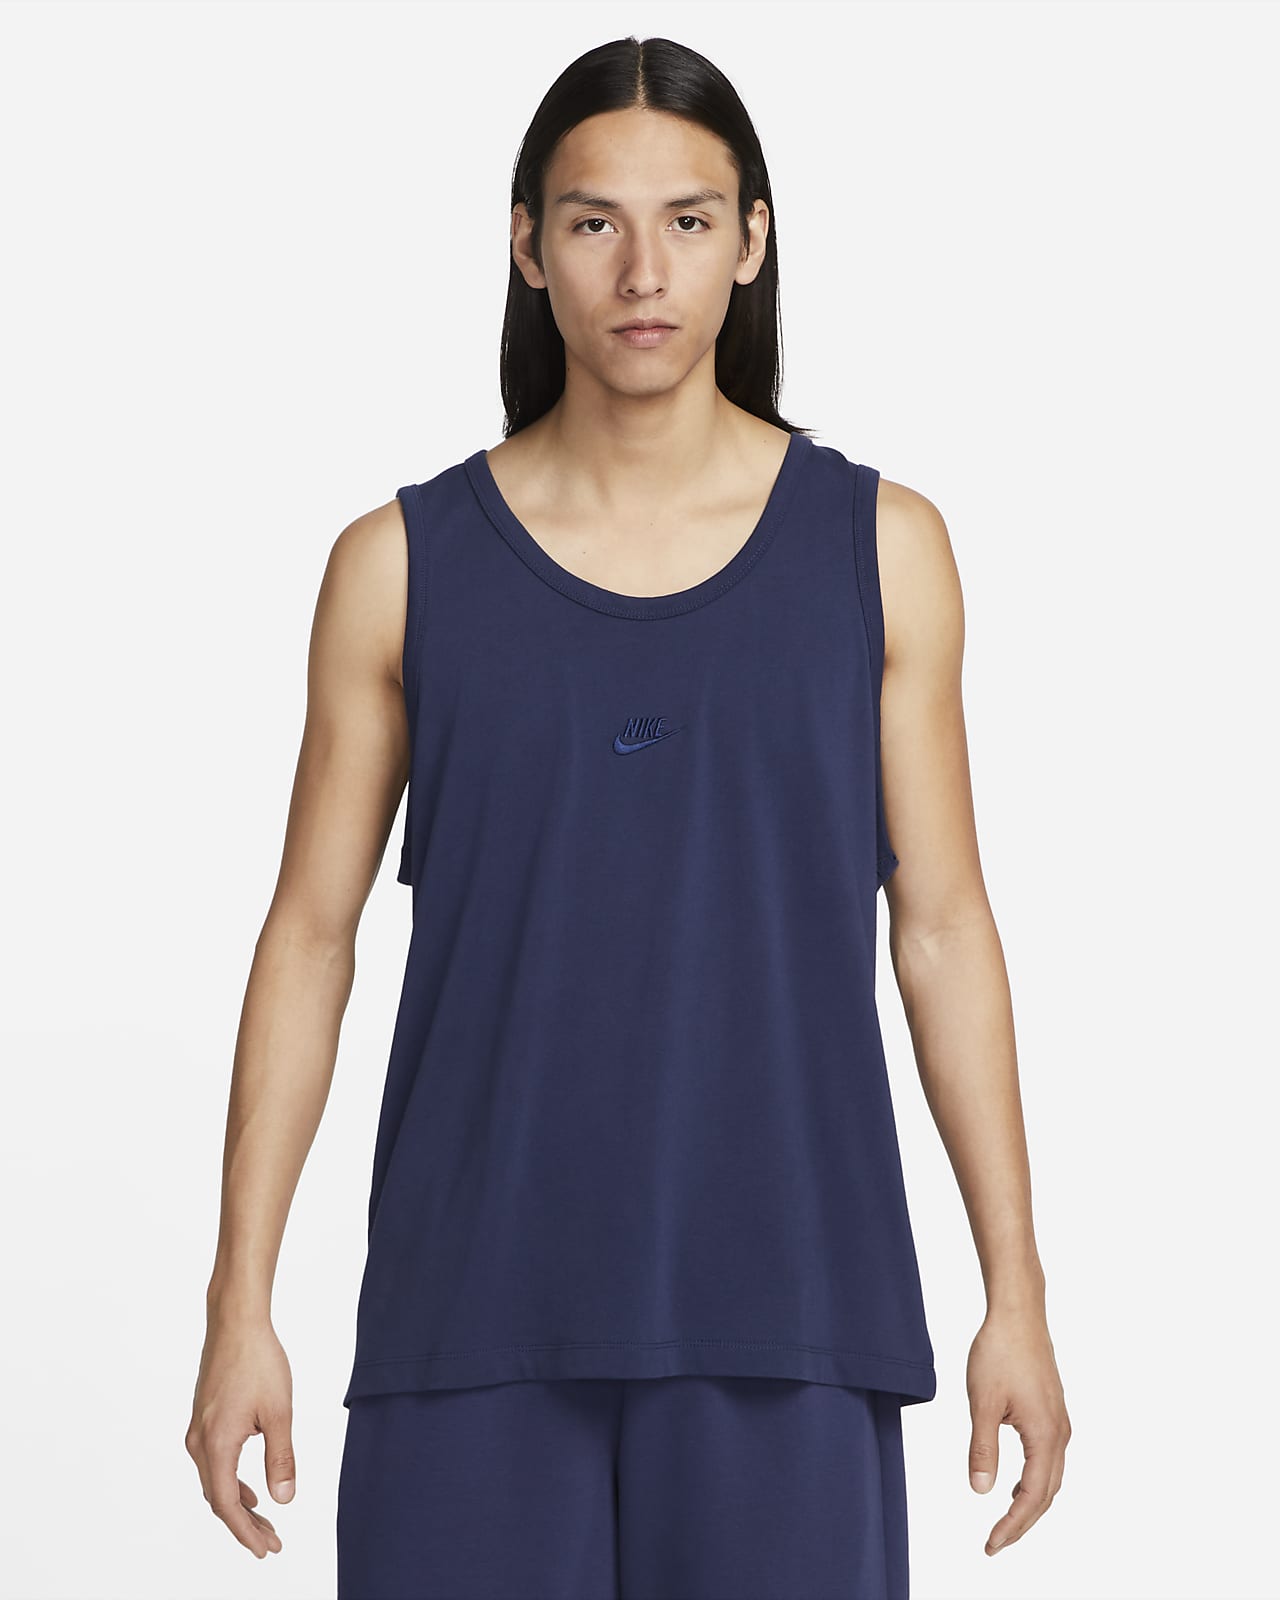 Men's Tank Tops & Sleeveless Shirts. Nike PT